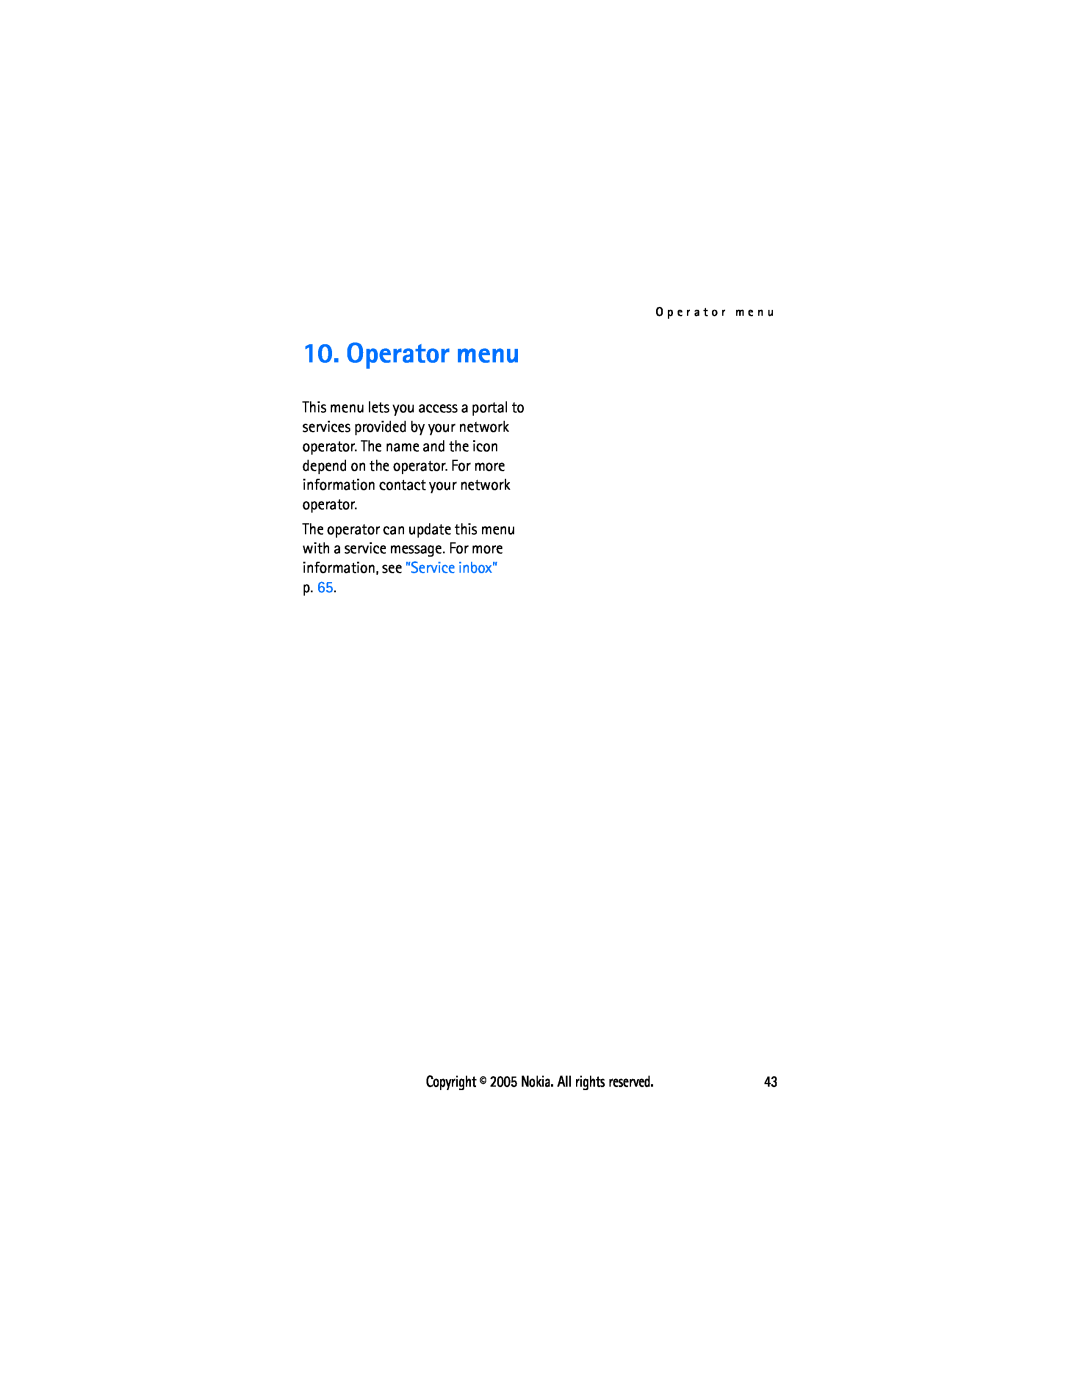 Sonic Alert 6021 manual Operator menu, O p e r a t o r m e n u, Copyright 2005 Nokia. All rights reserved 